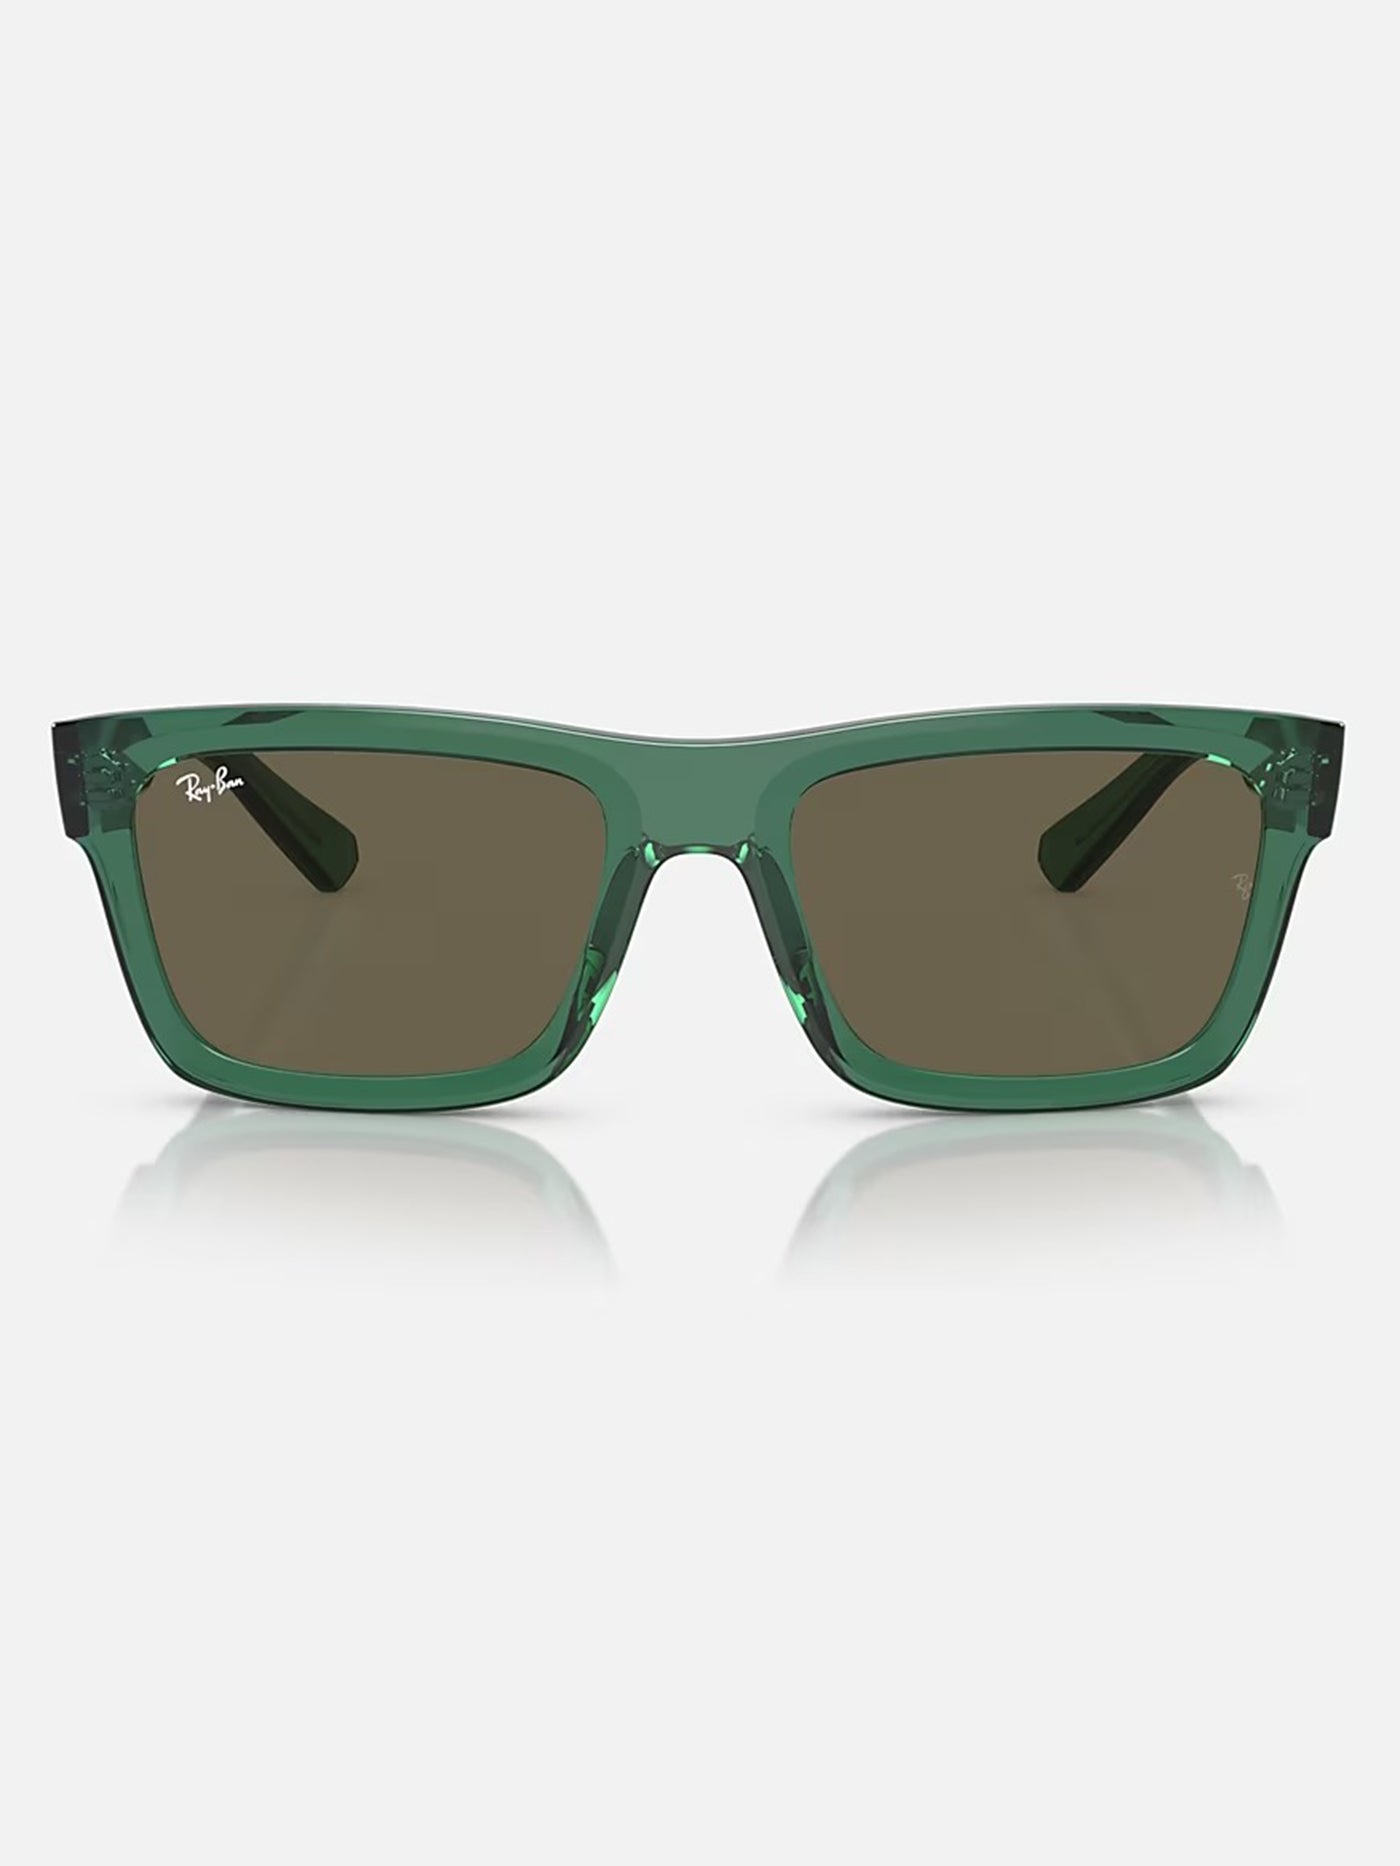 Ray-Ban Warren Trans Green/Brown Sunglasses